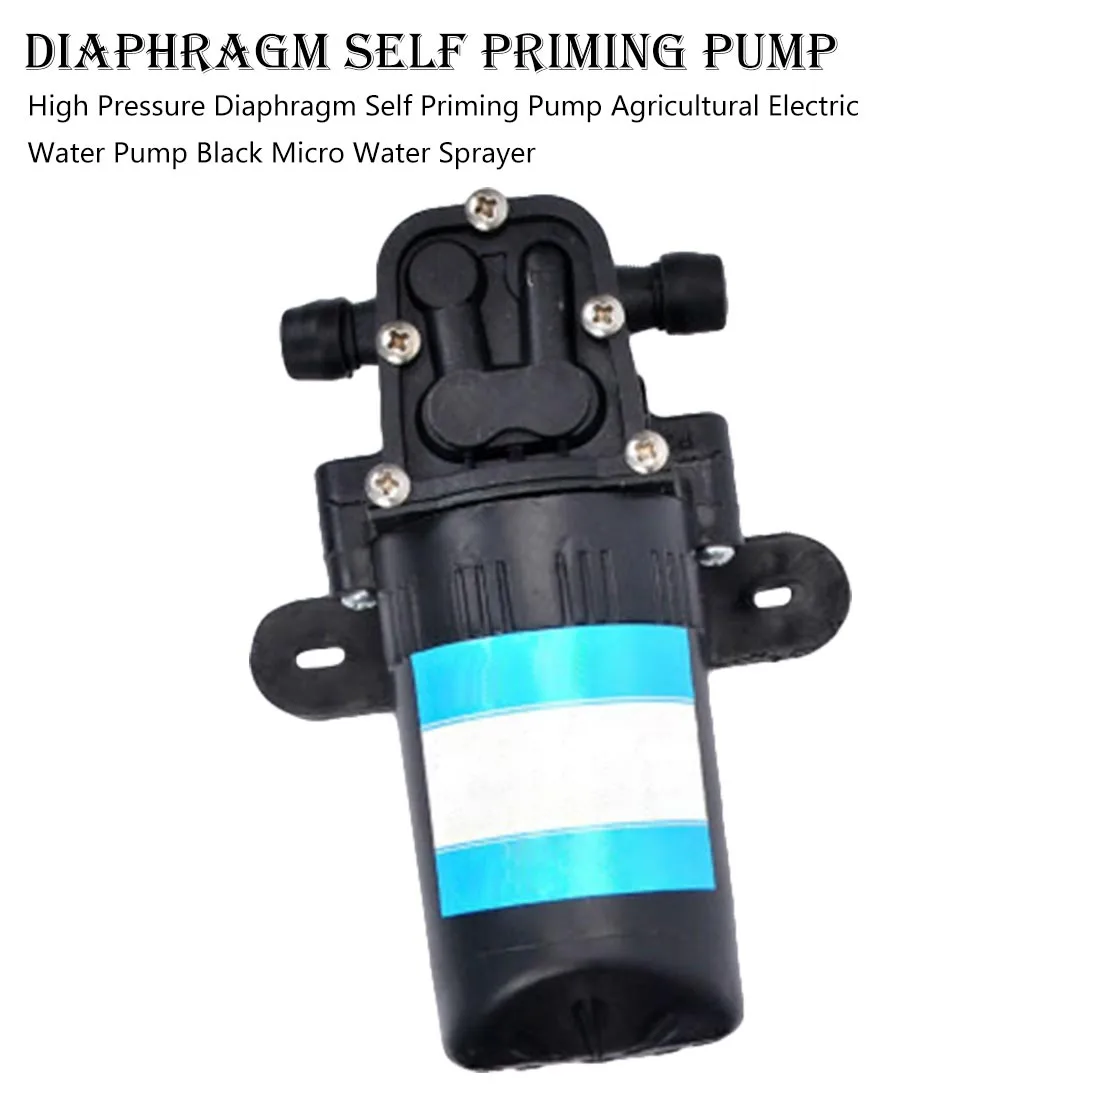 

Micro Water Sprayer High Pressure Diaphragm Self Priming Pump Agricultural Electric Water Pump Black DC 12V 70PSI 3.5L/min